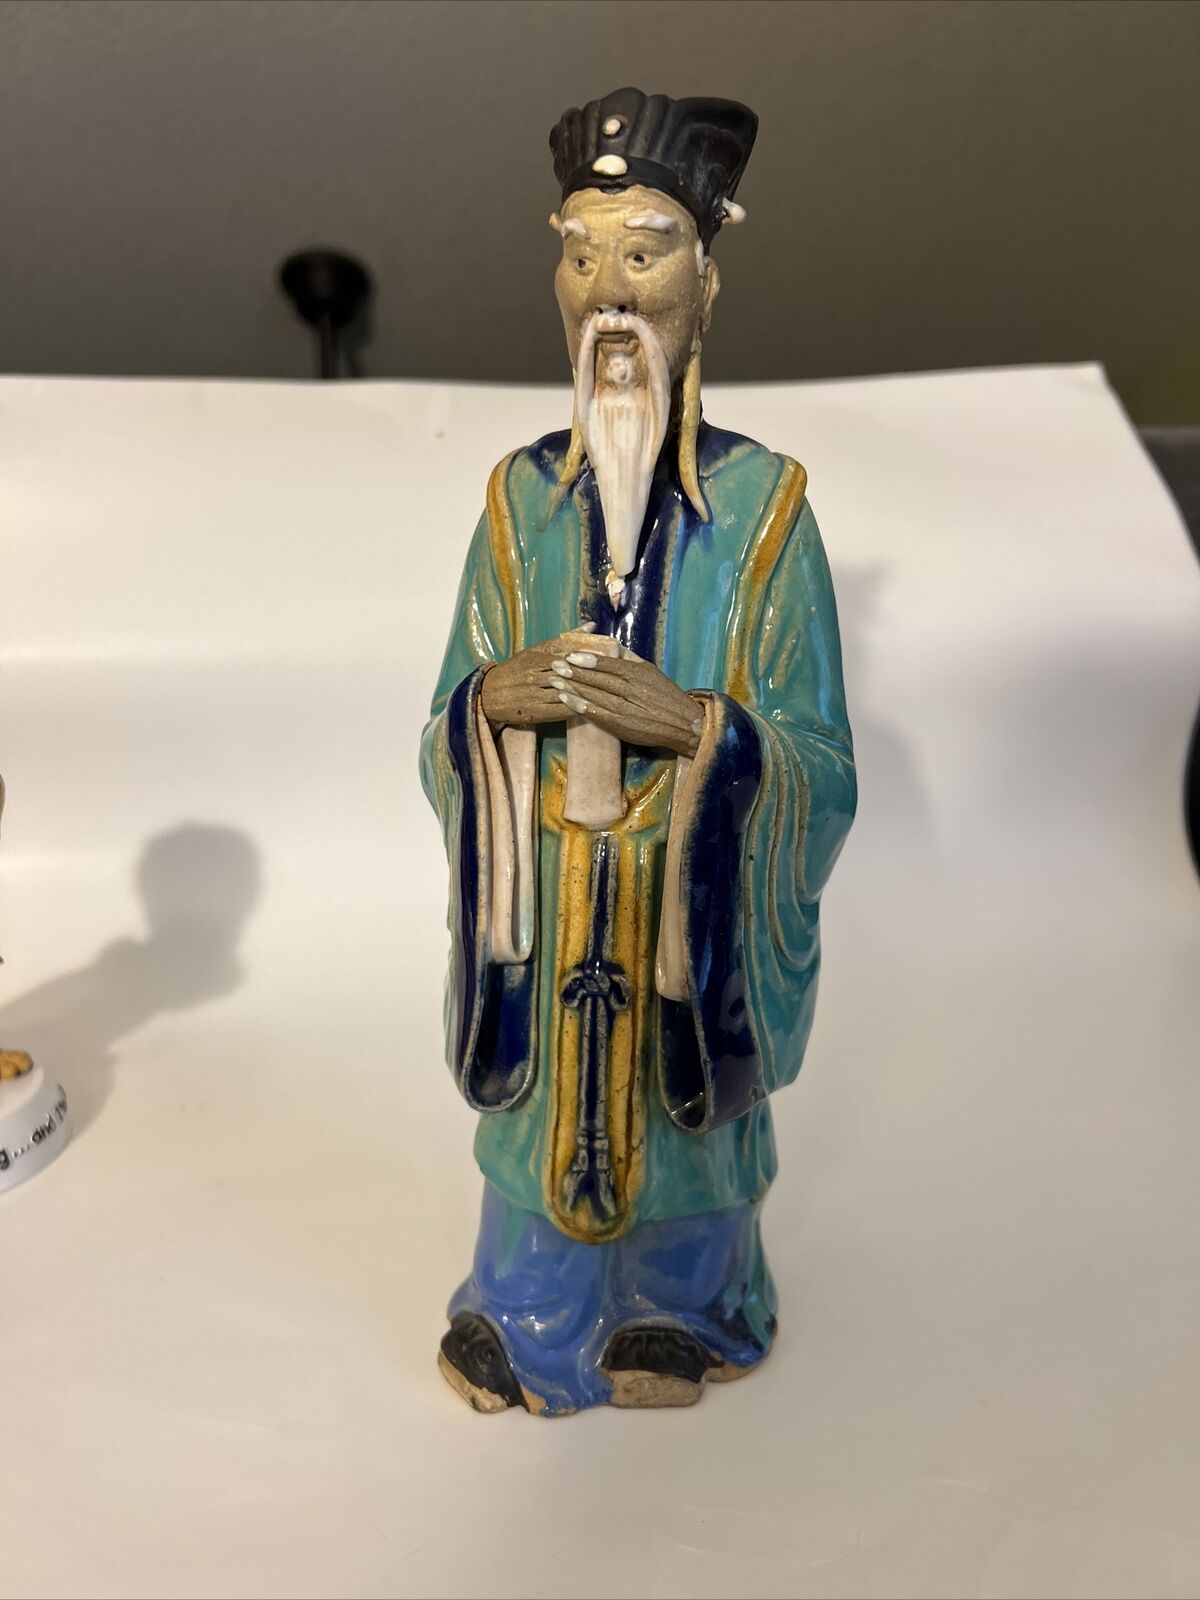 Vintage Antique 10” TALL Chinese Mudman Ceramic Figurine